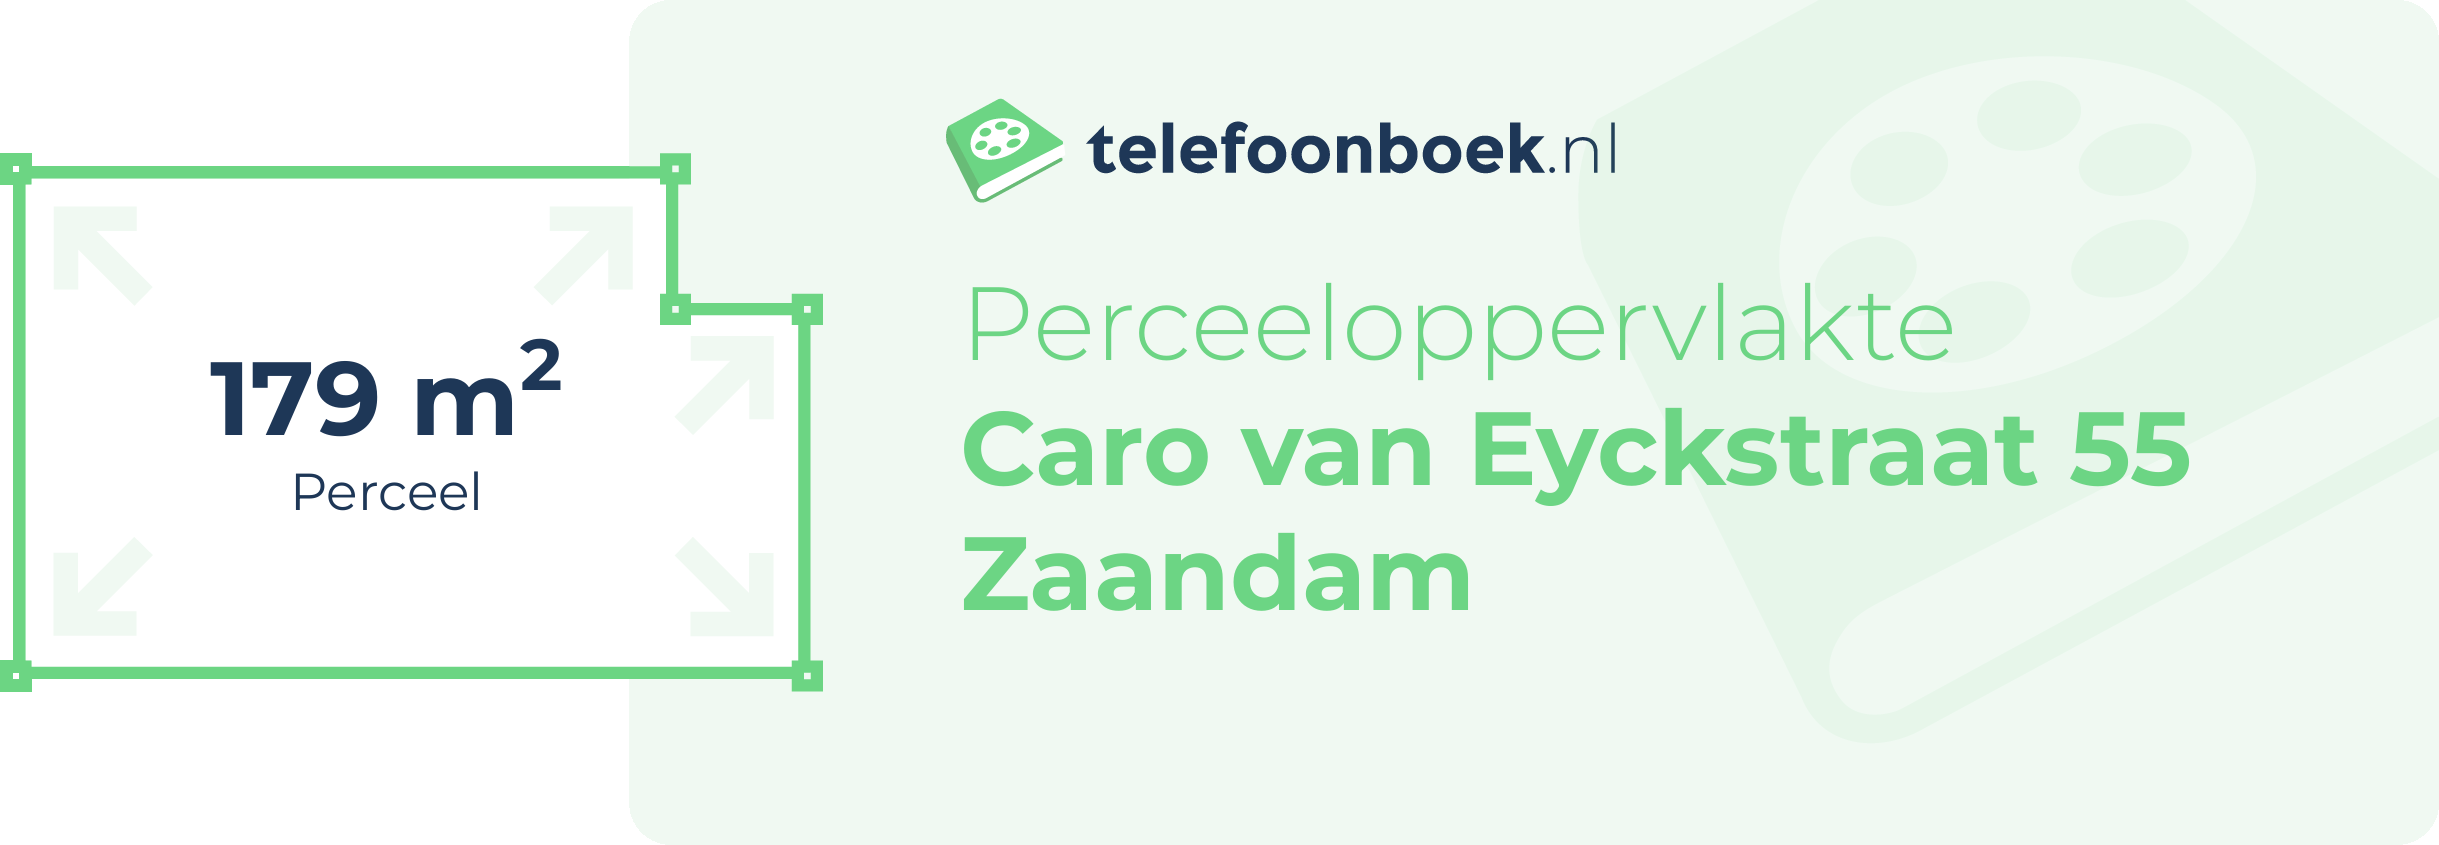 Perceeloppervlakte Caro Van Eyckstraat 55 Zaandam